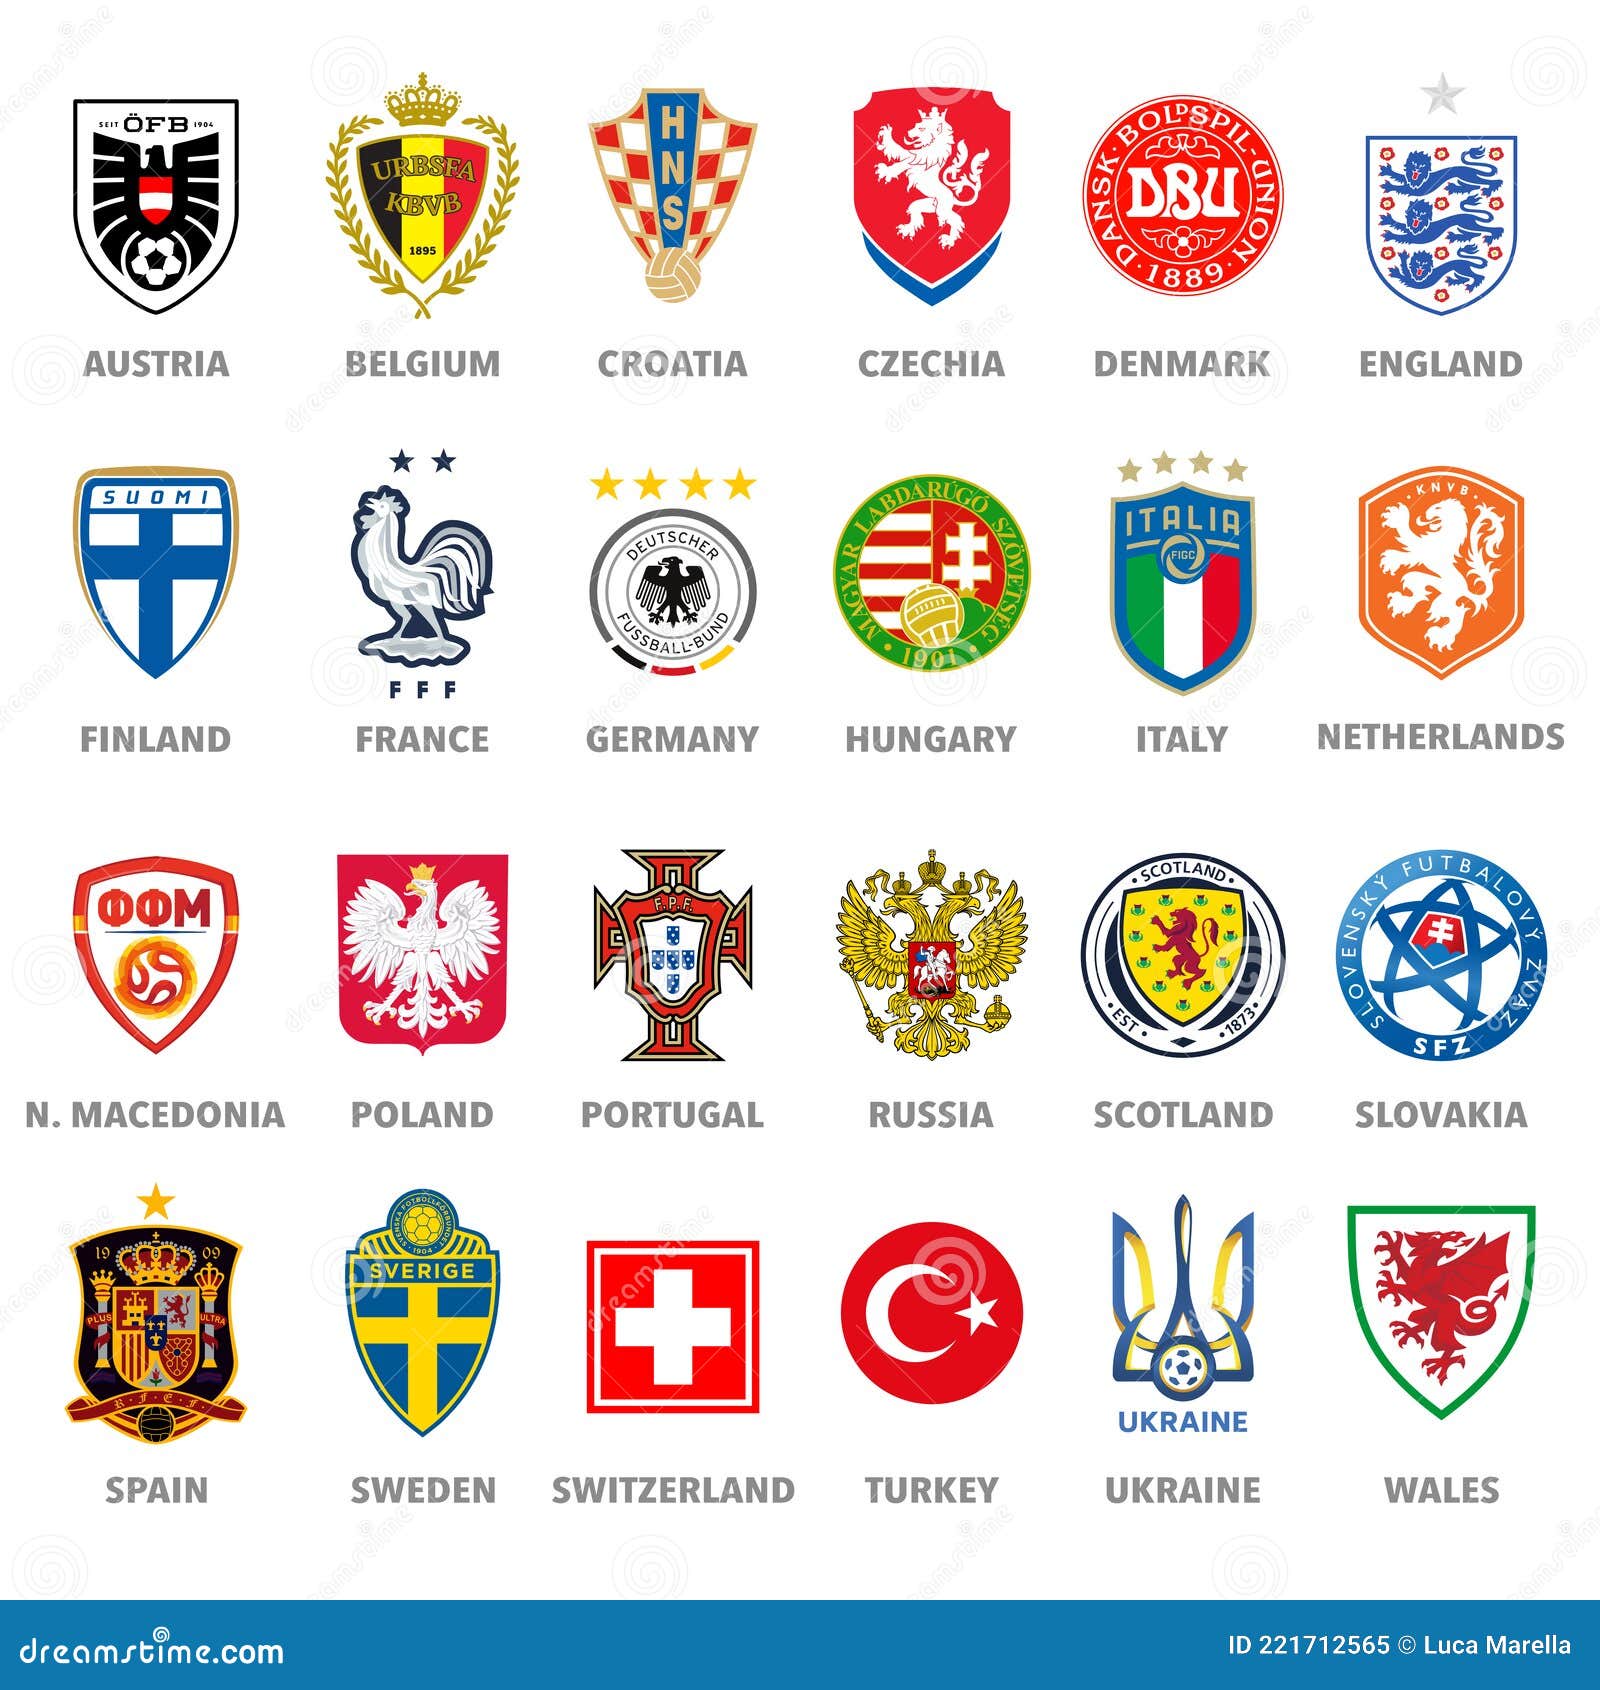 Austria National Football Team FIFA Soccer Badge Patch 